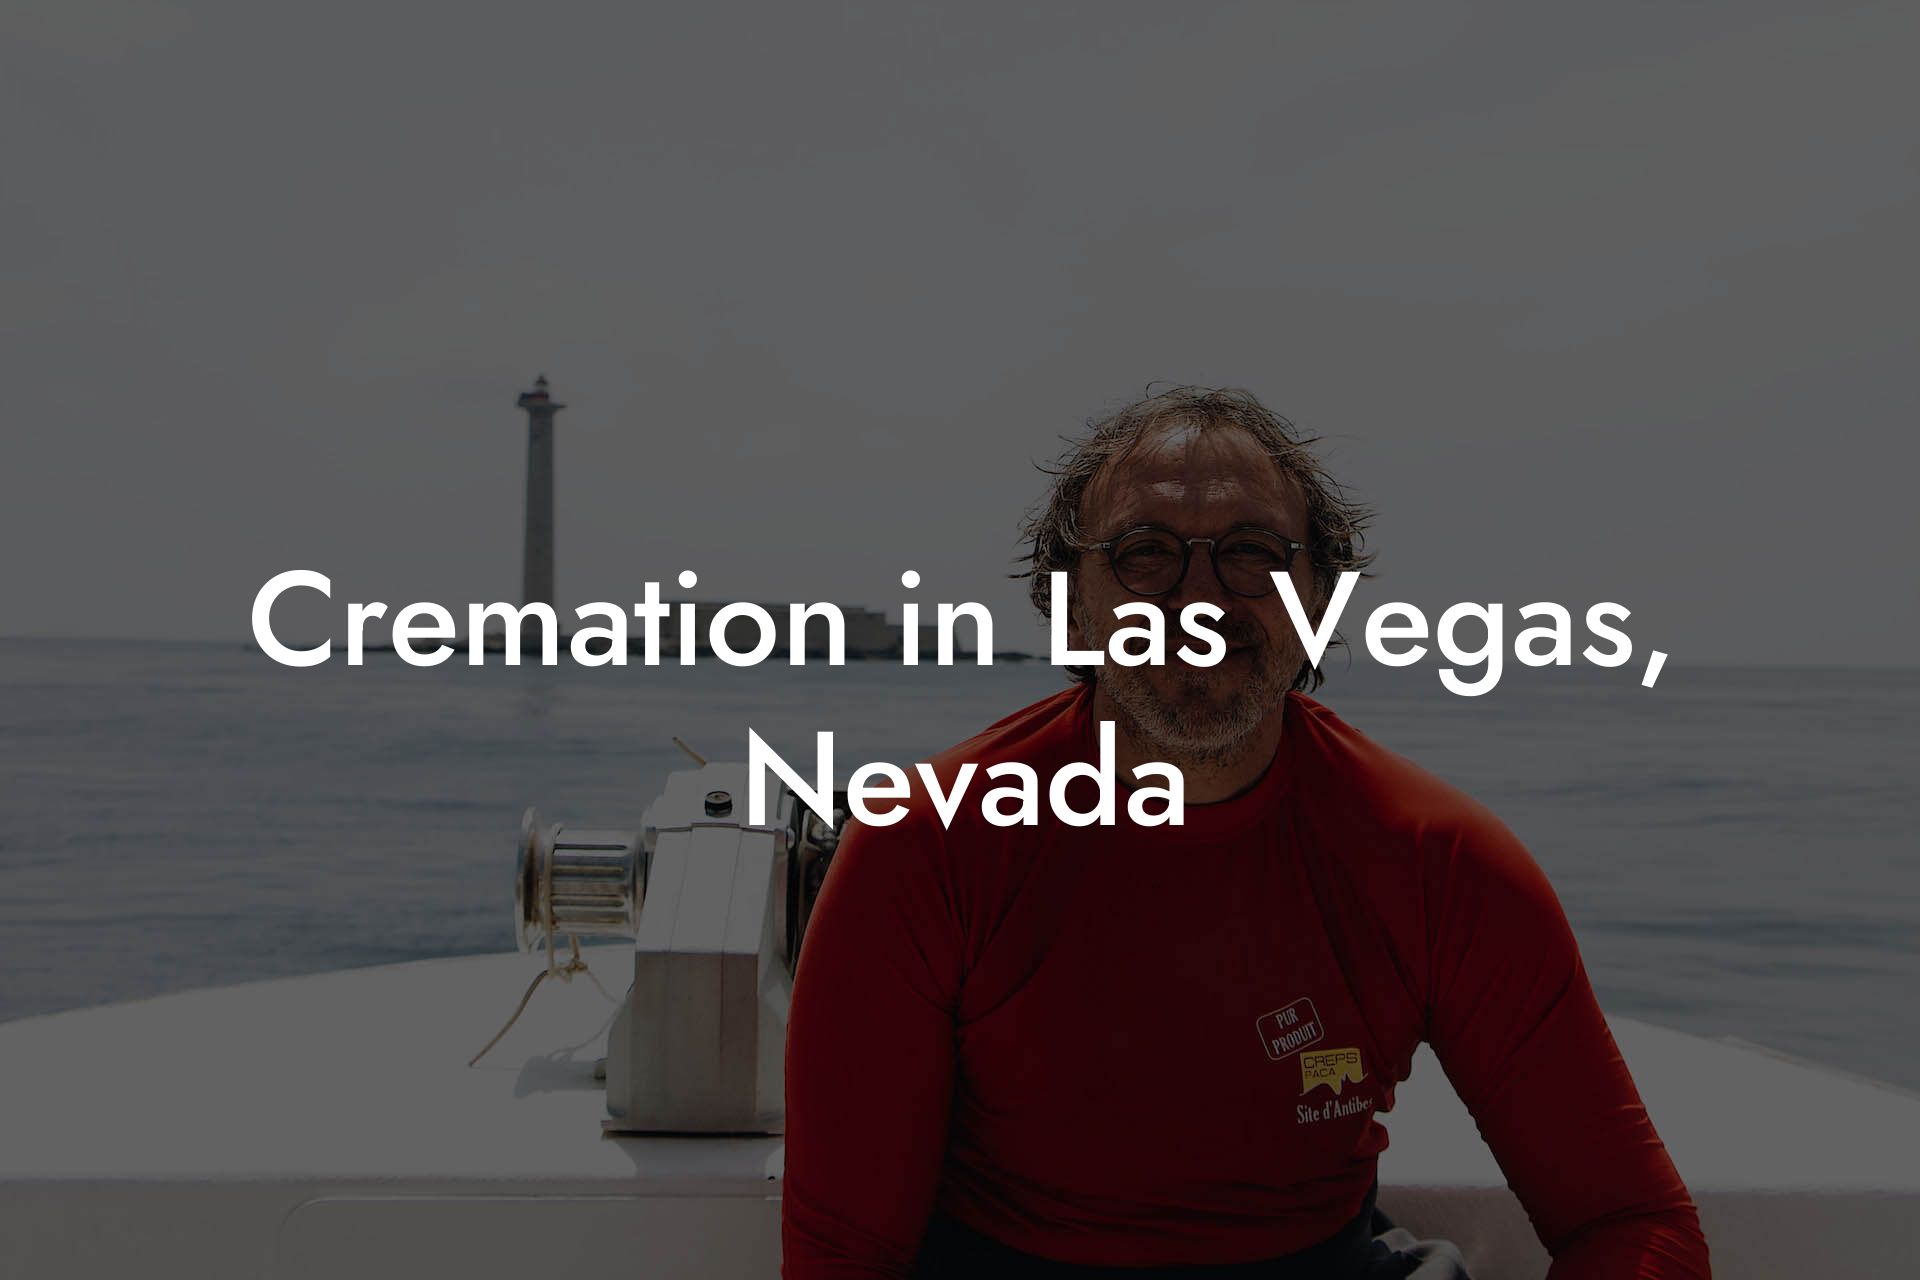 Cremation in Las Vegas, Nevada